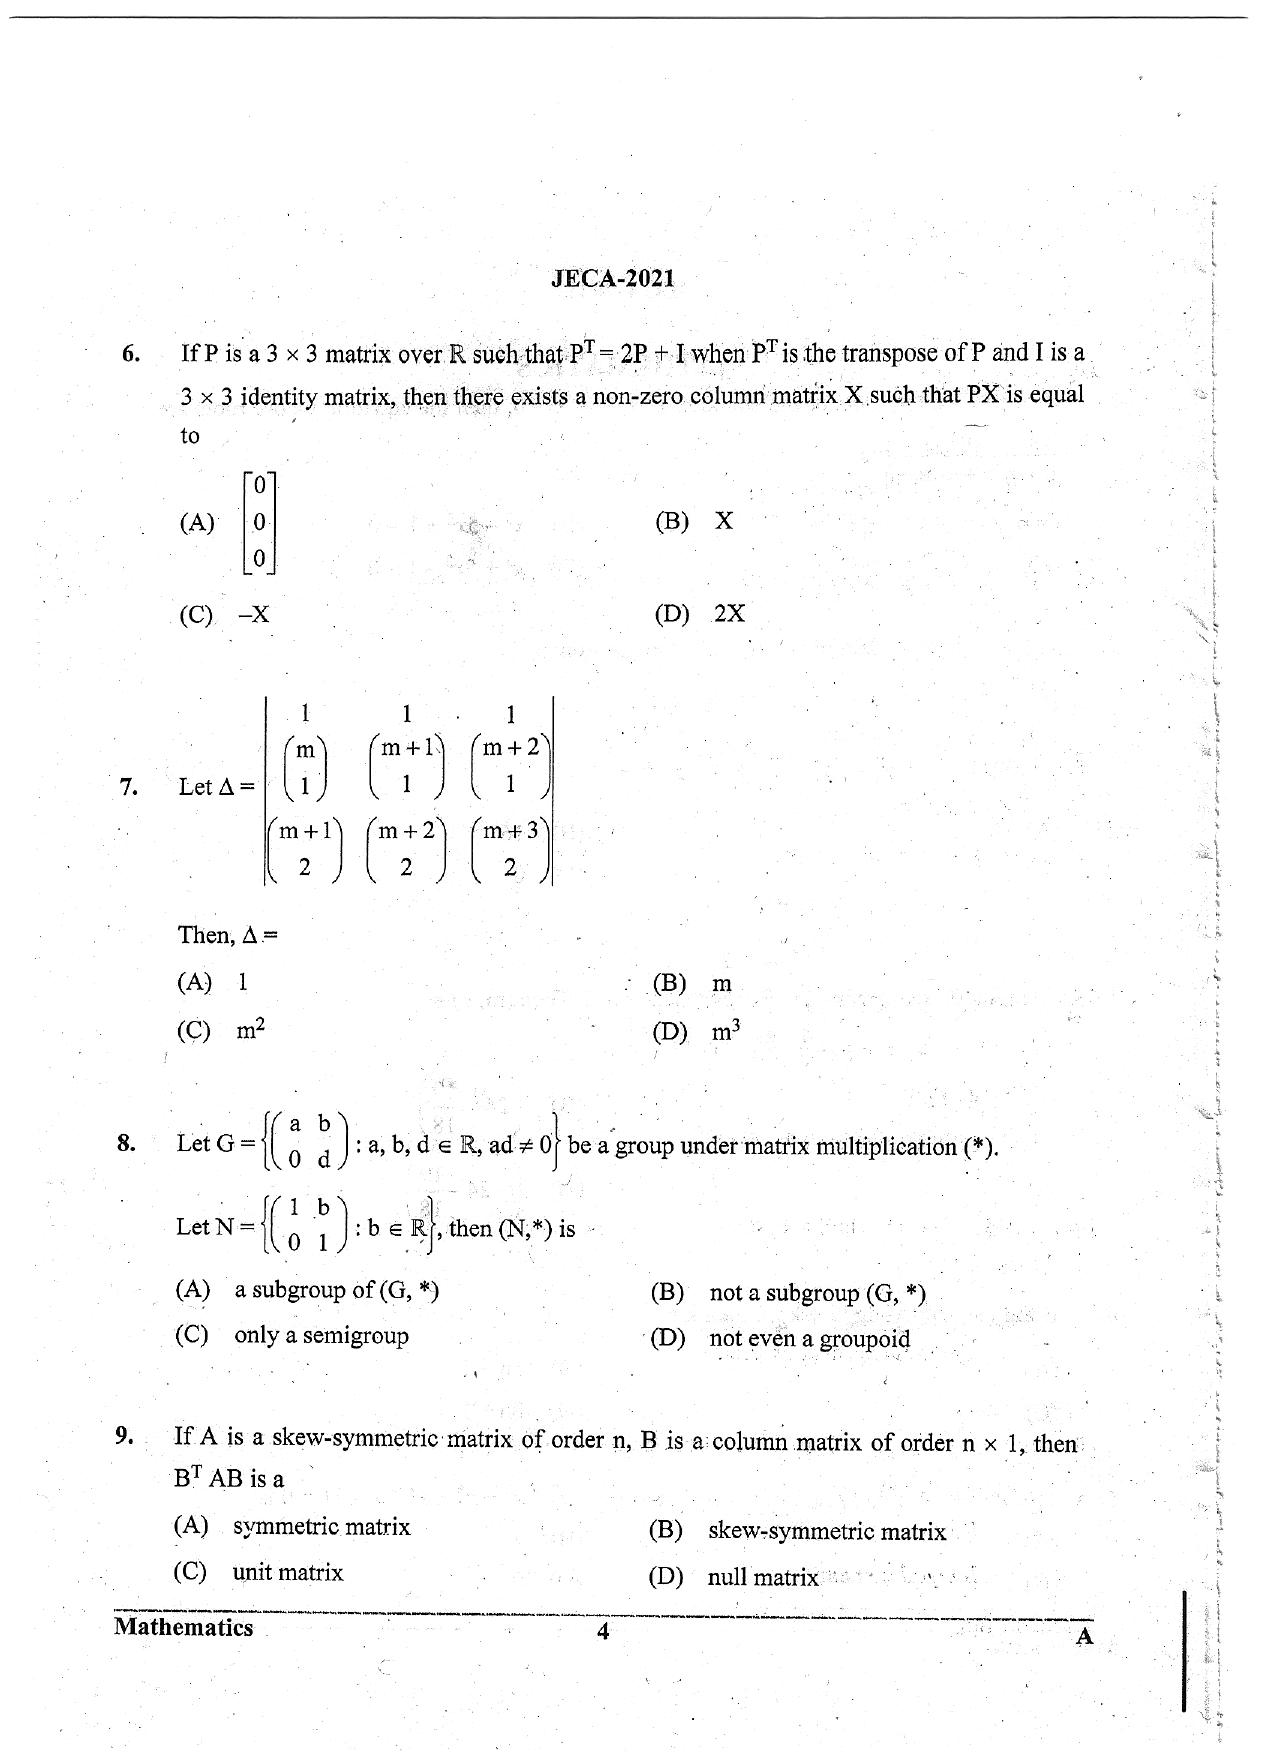 WB JECA 2021 Mathematics Question Paper - Page 4